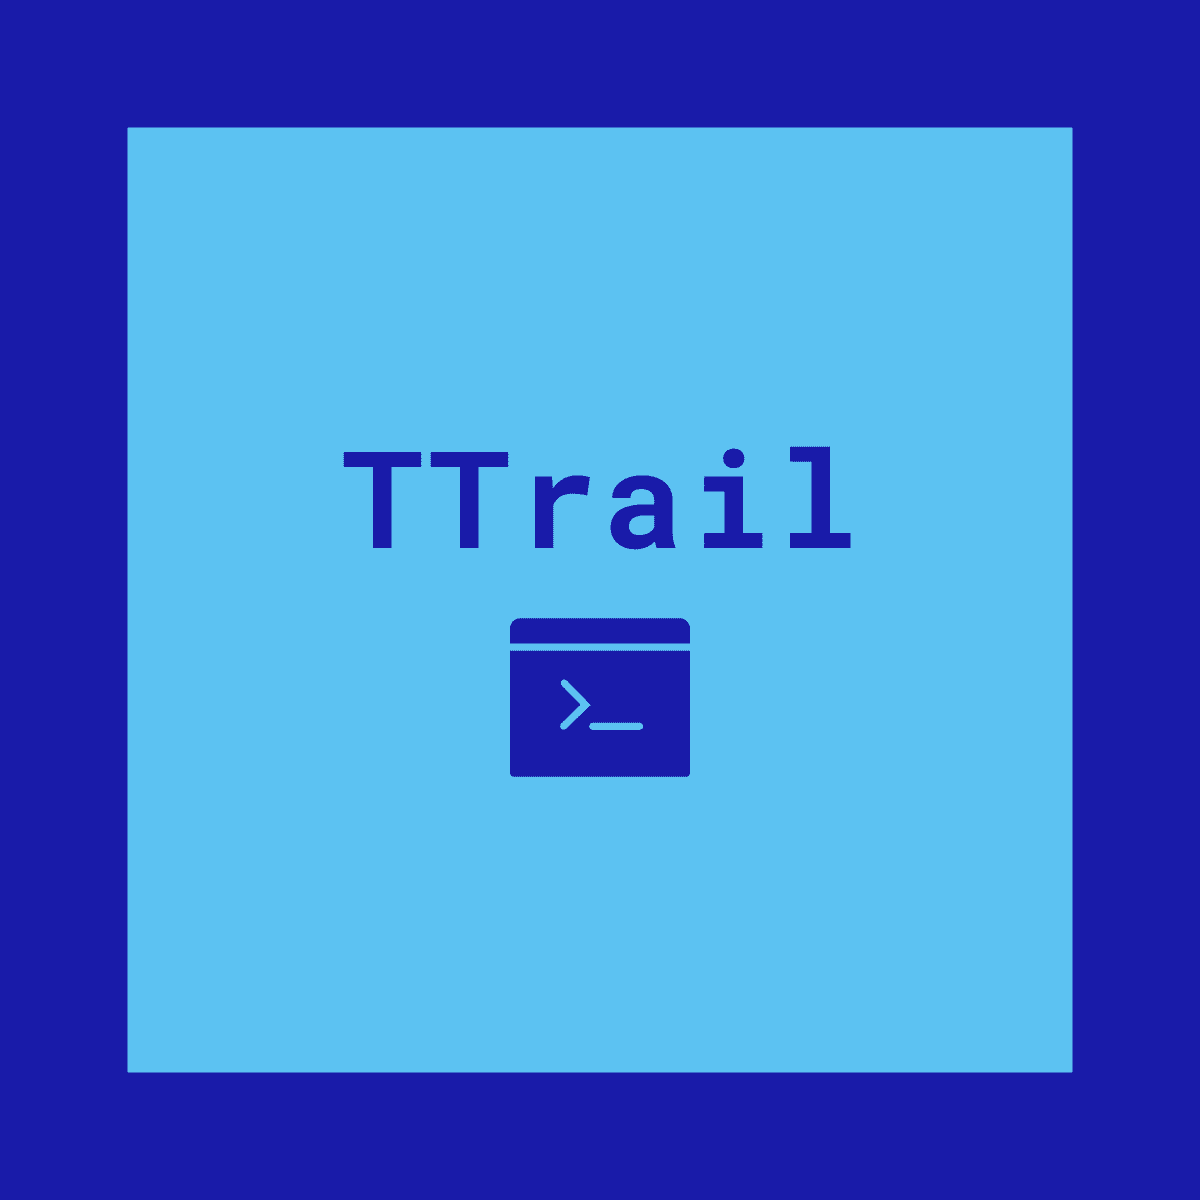 TTrail